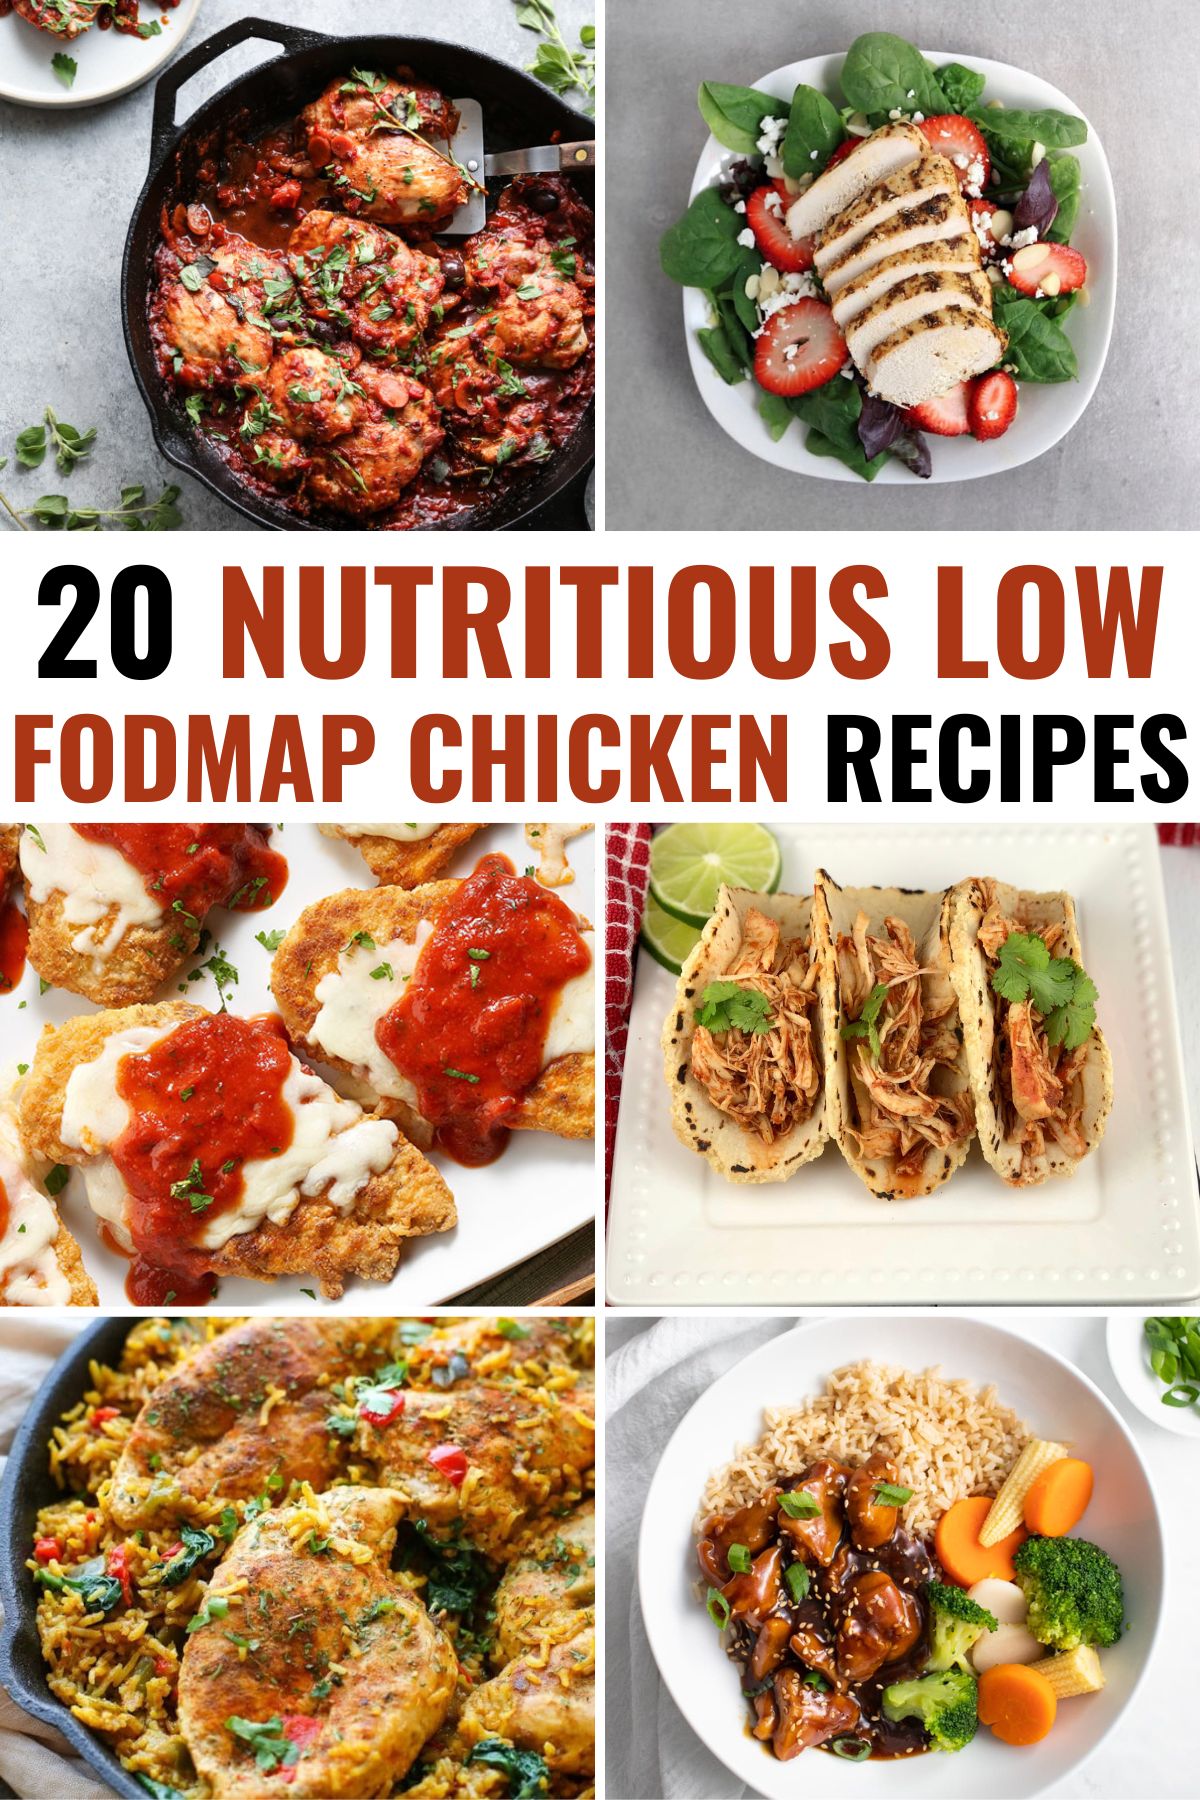 20 nutritious low fodmap recipes
